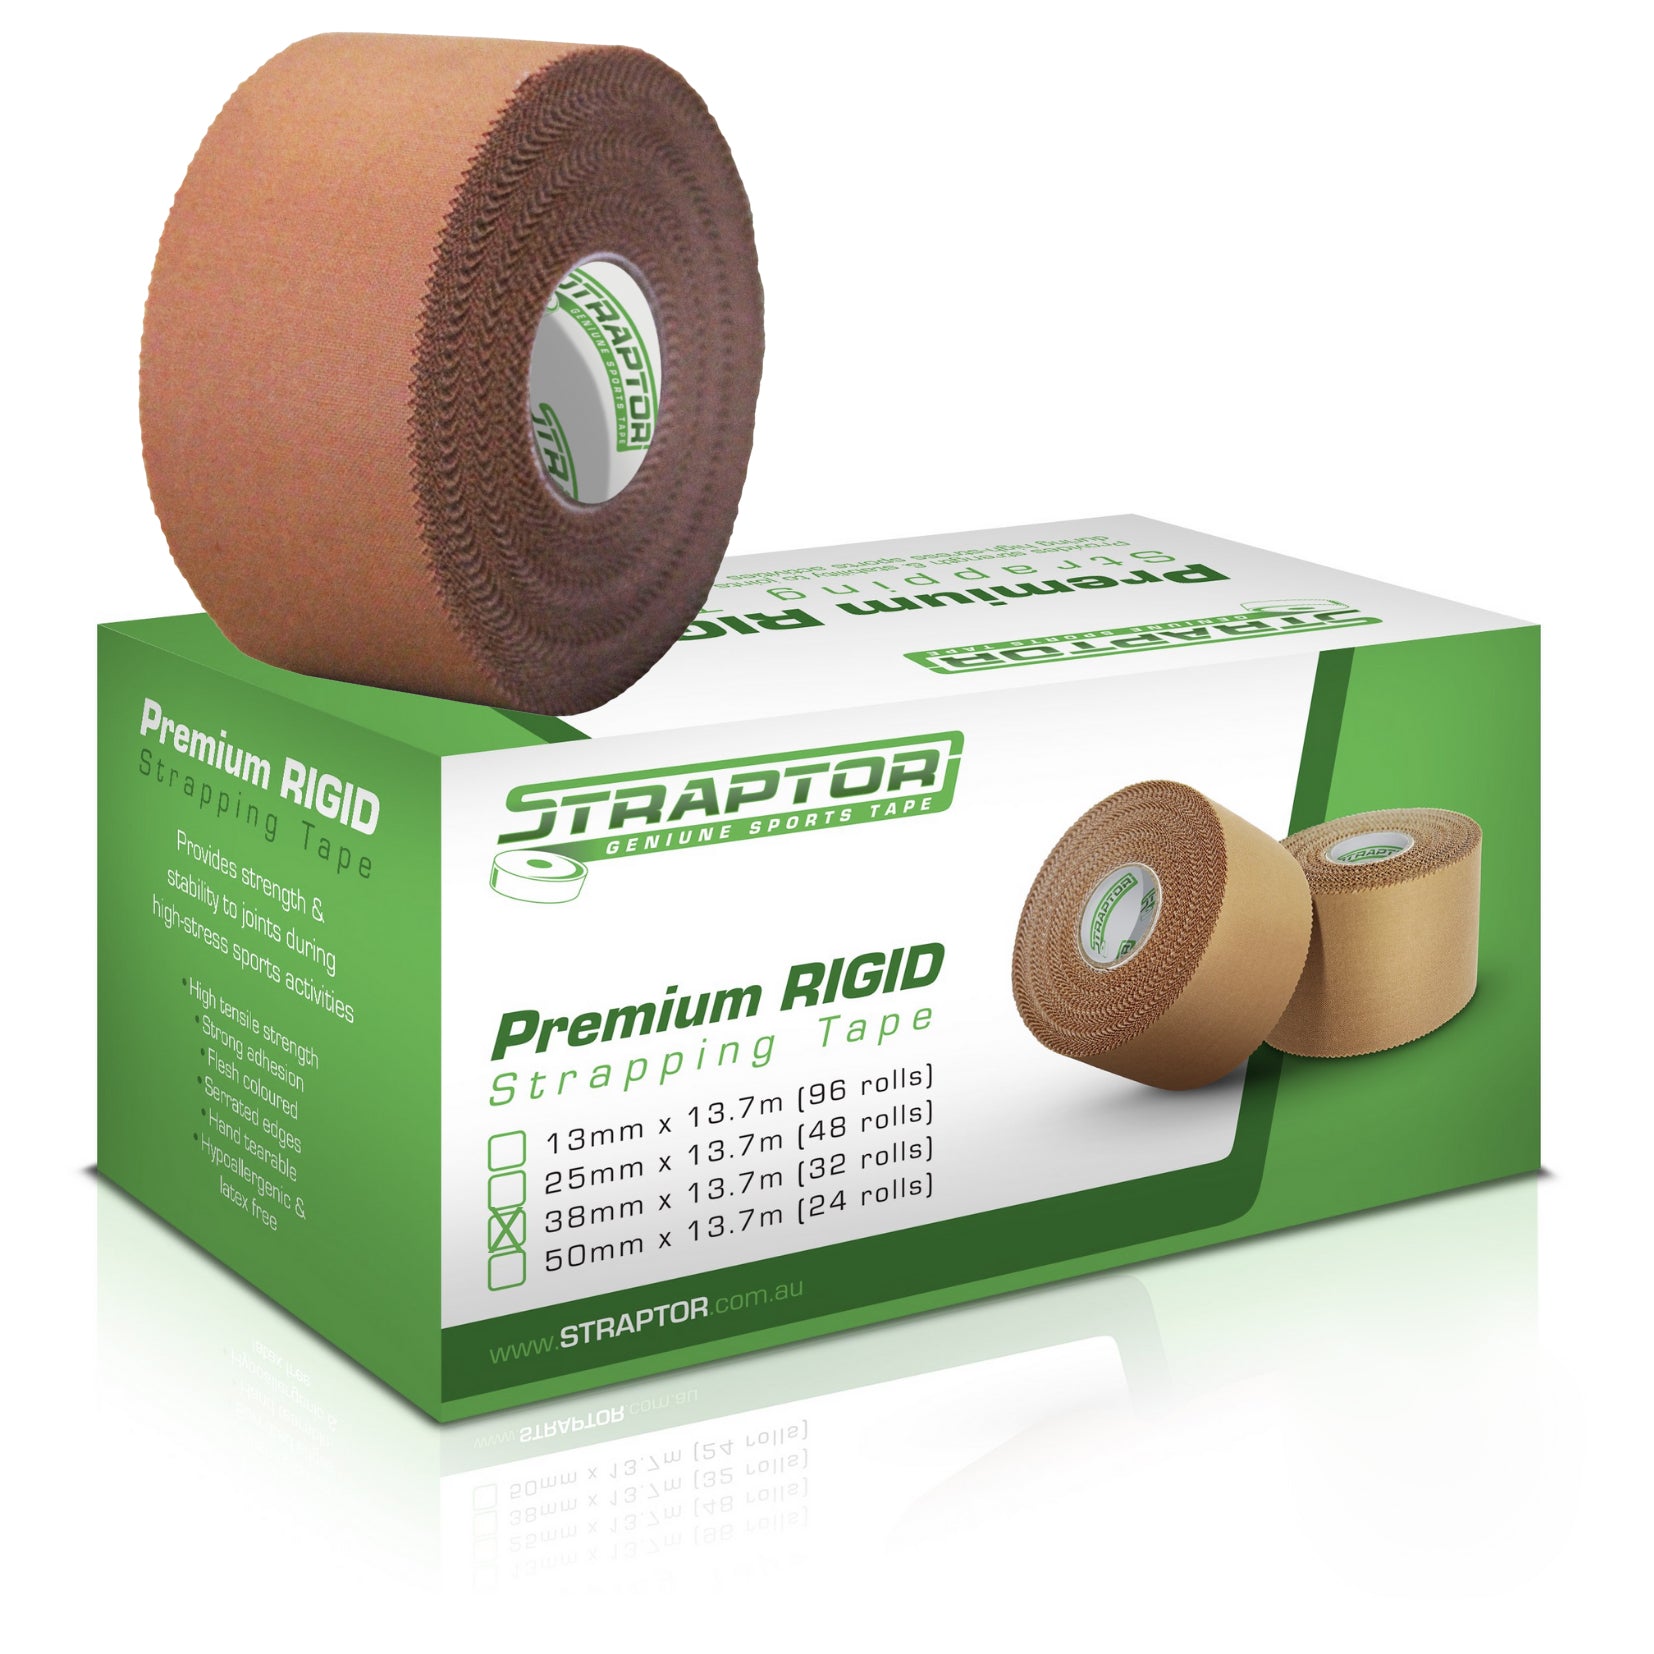 Premium Rigid Sports Strapping Tape